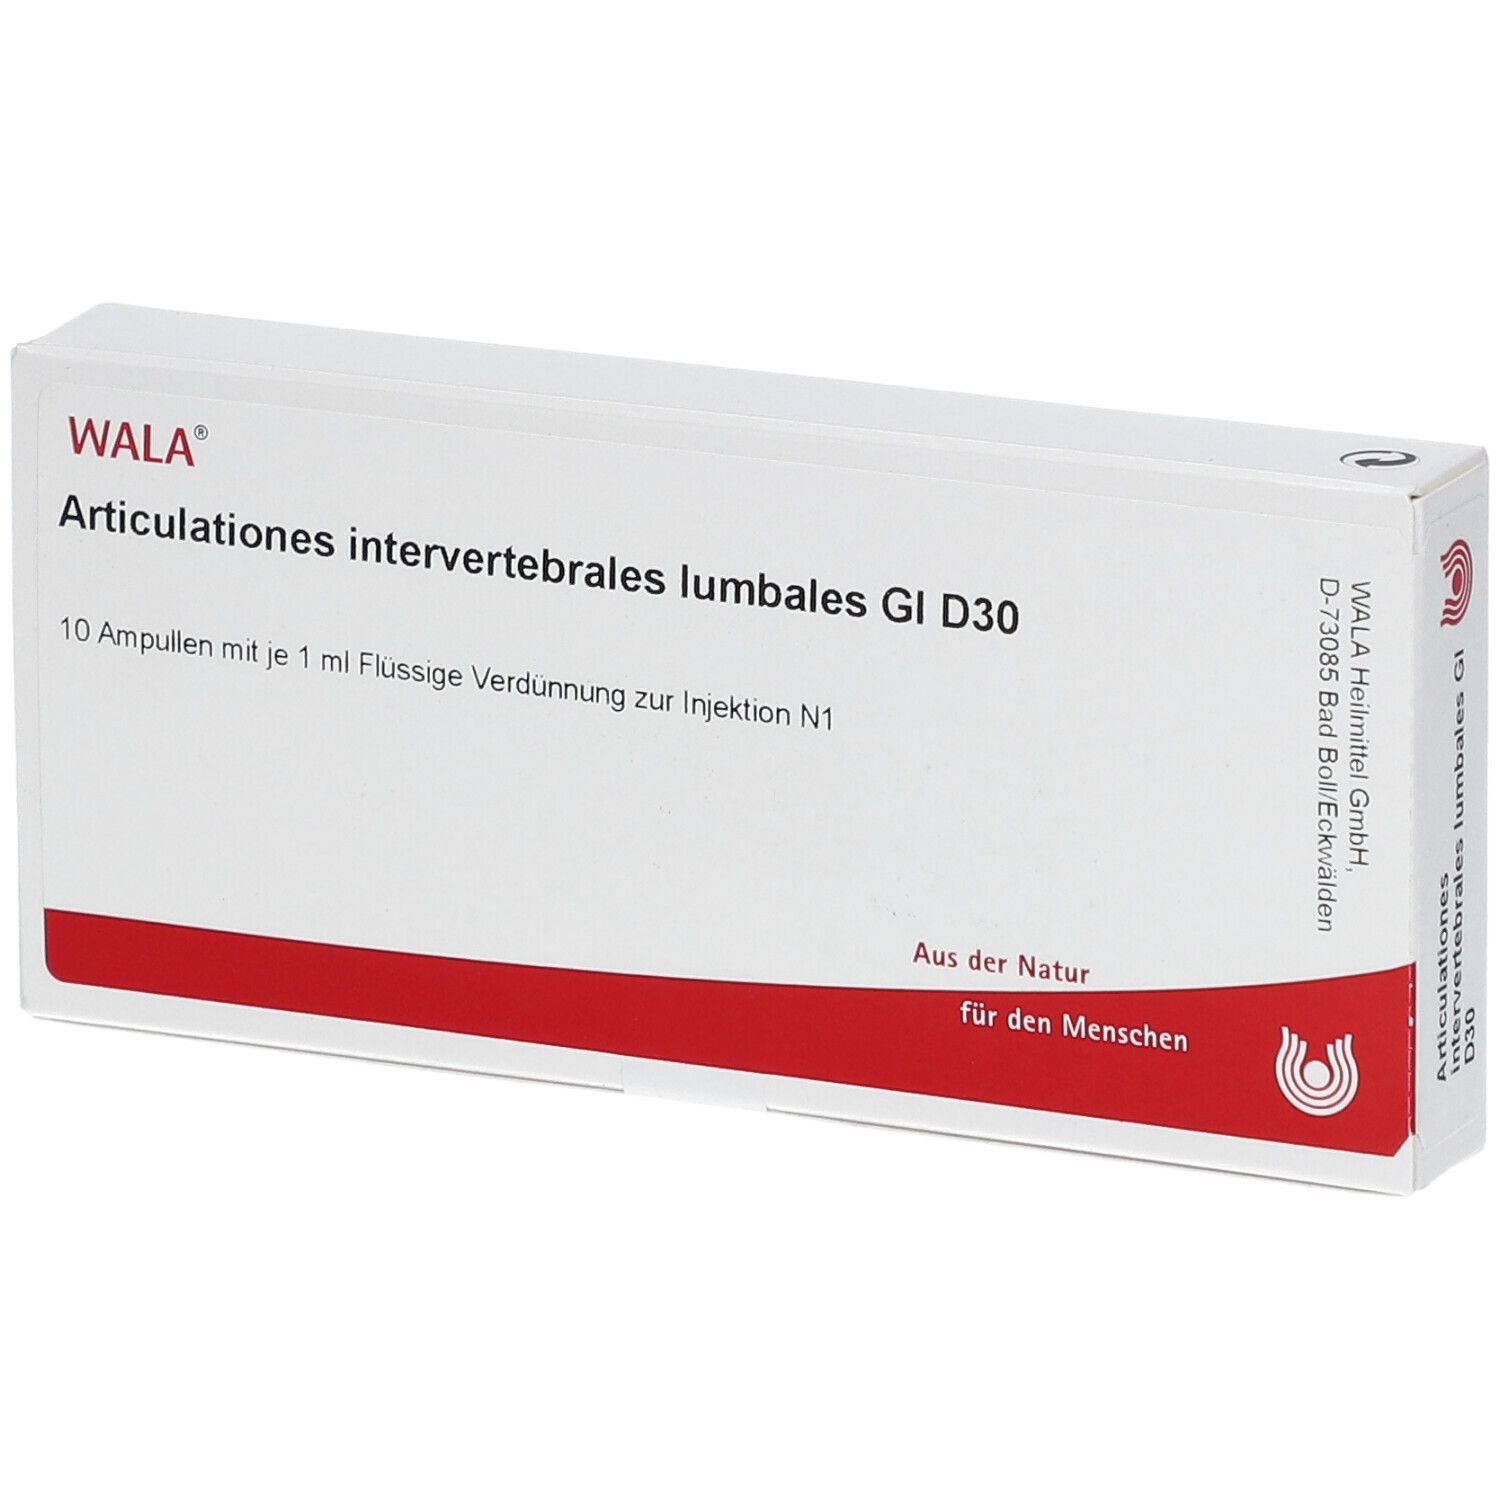 Wala® Articulationes intervertebrales lumbales Gl D 30